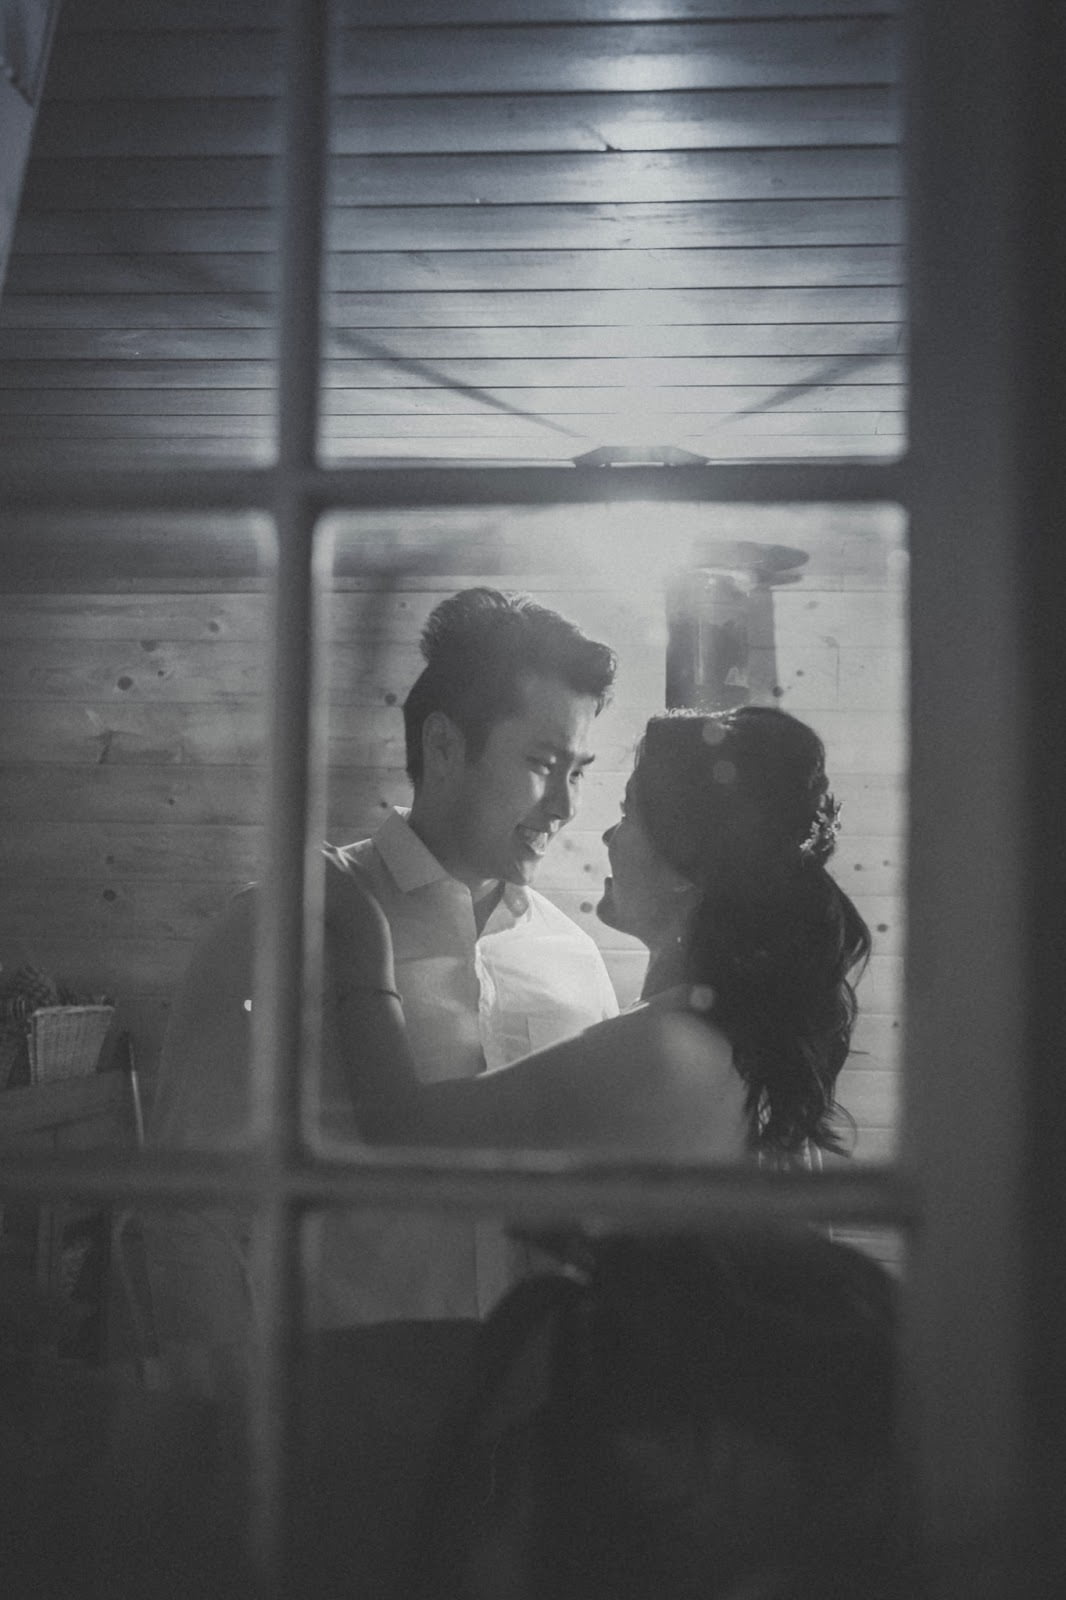 Dancing couple seen through a paned window